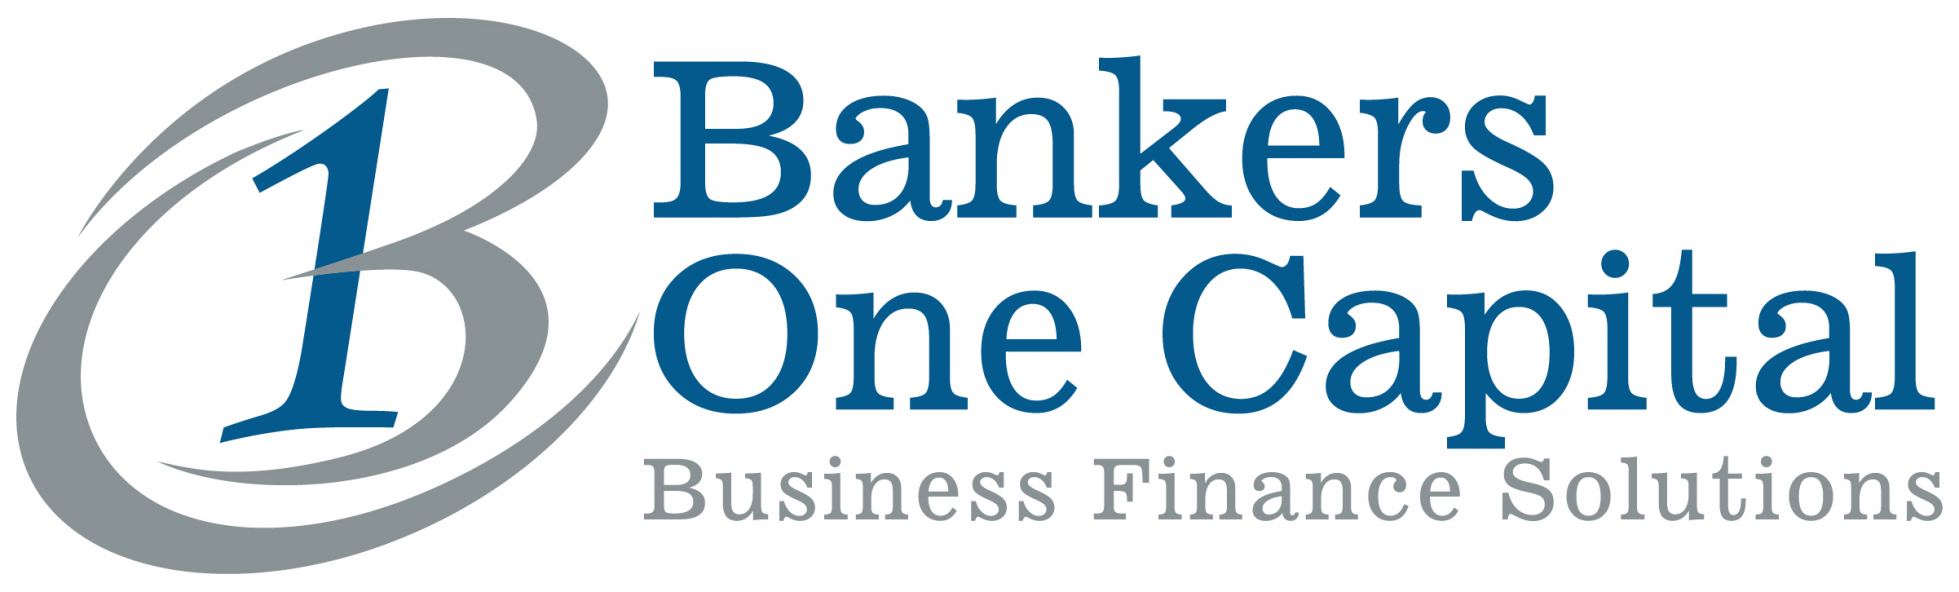 Bankers1Capital Logo